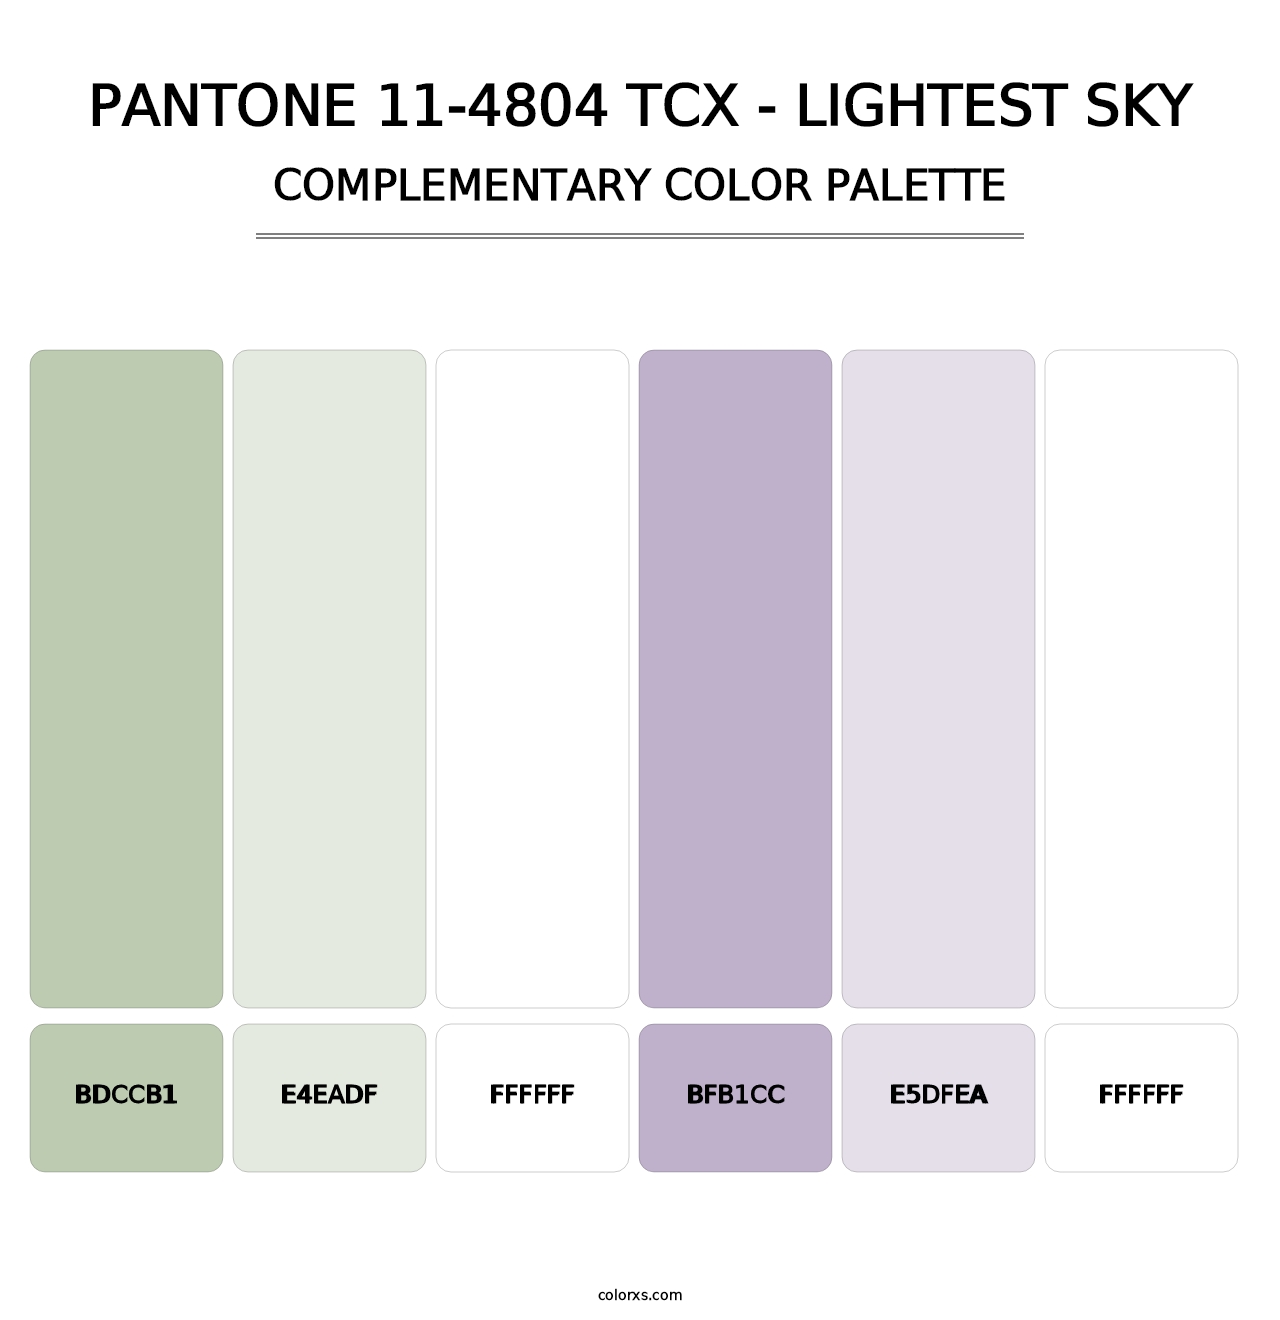 PANTONE 11-4804 TCX - Lightest Sky - Complementary Color Palette